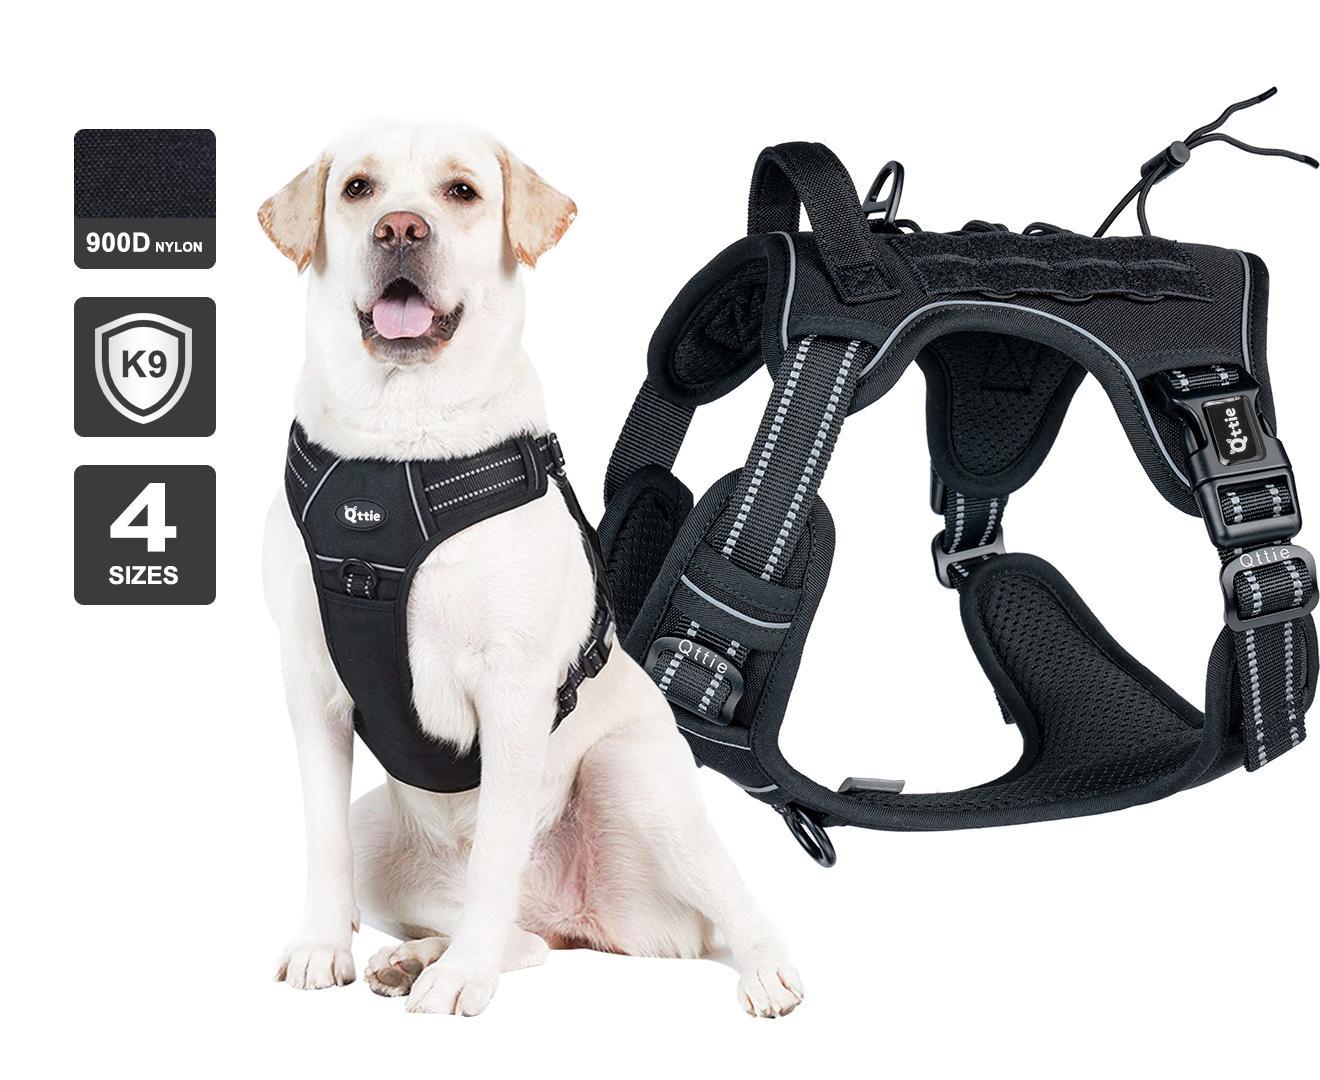 Qttie Tactical Dog Harness No Pull Adjustable Pet Military Working Training Vest Jacket(Black, X Large)